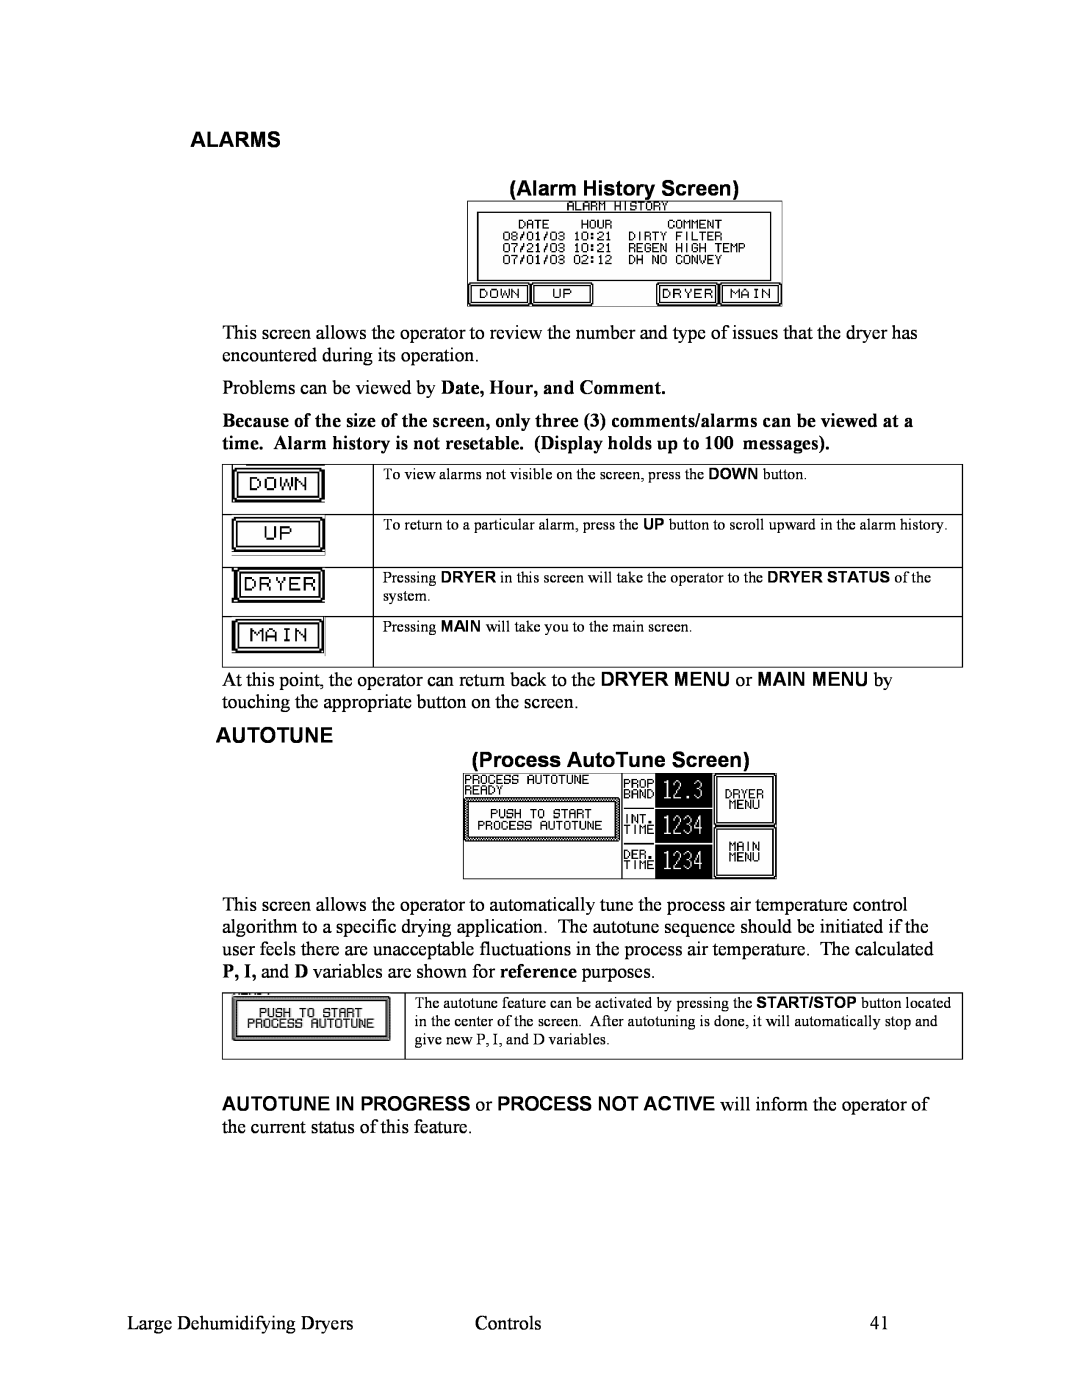 Sterling 882.00295.00 specifications ALARMS Alarm History Screen, AUTOTUNE Process AutoTune Screen 